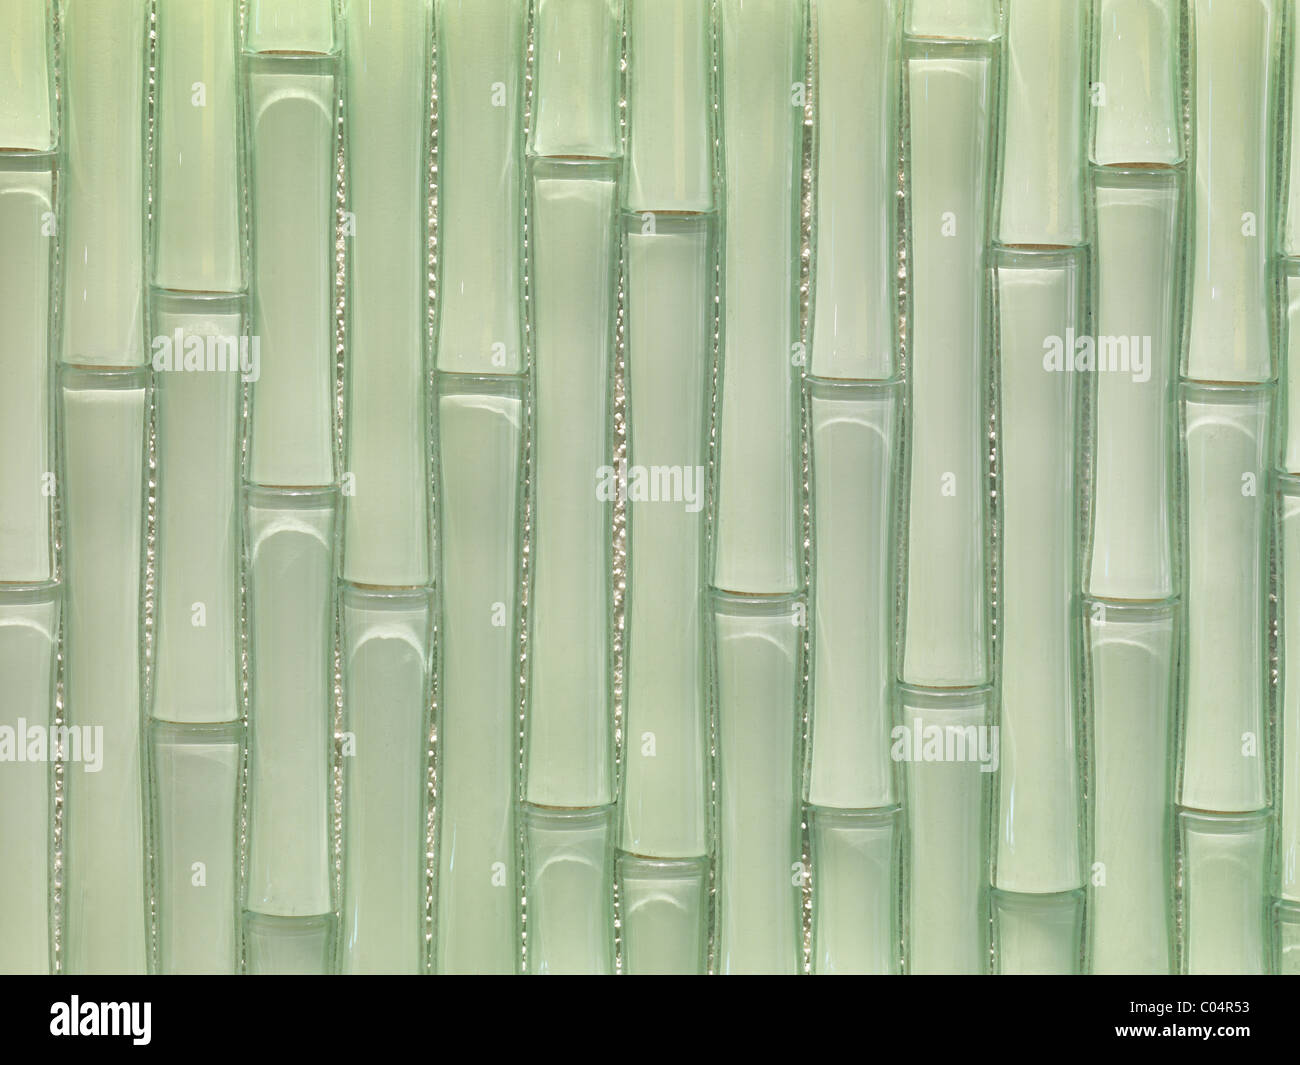 Bamboo shaped glass tiles Stock Photo - Alamy